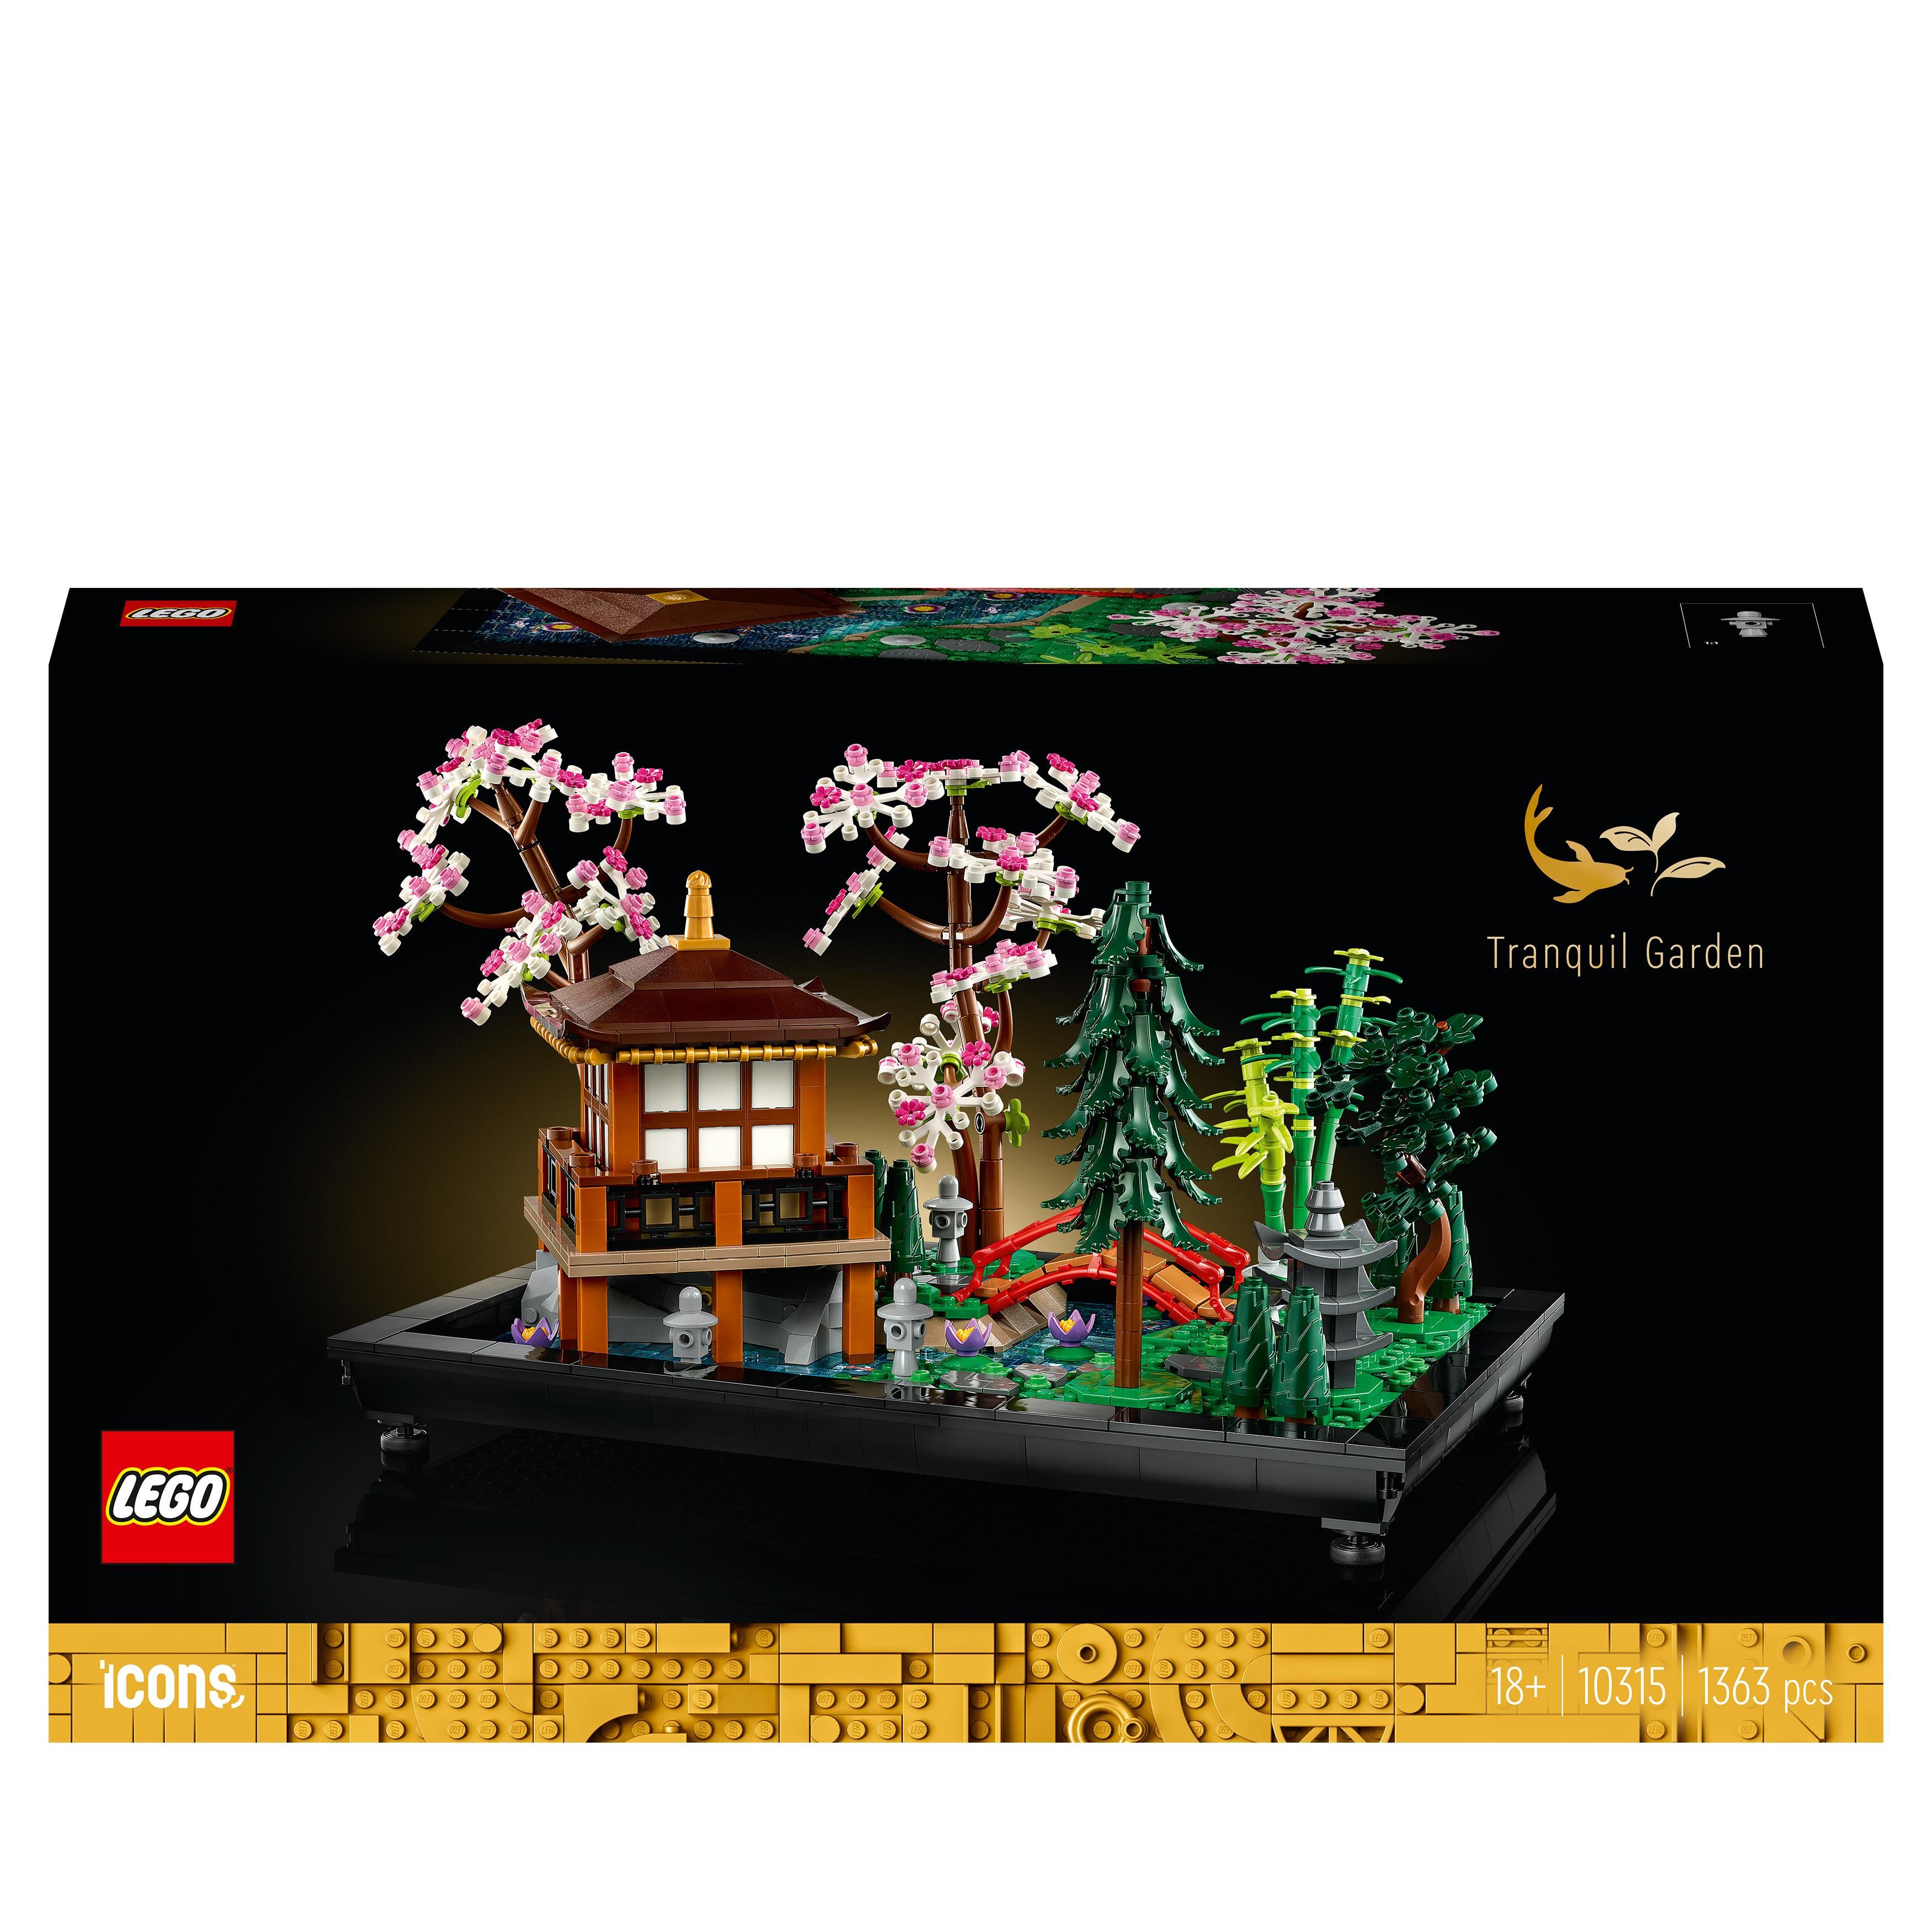 LEGO Il Giardino Tranquillo